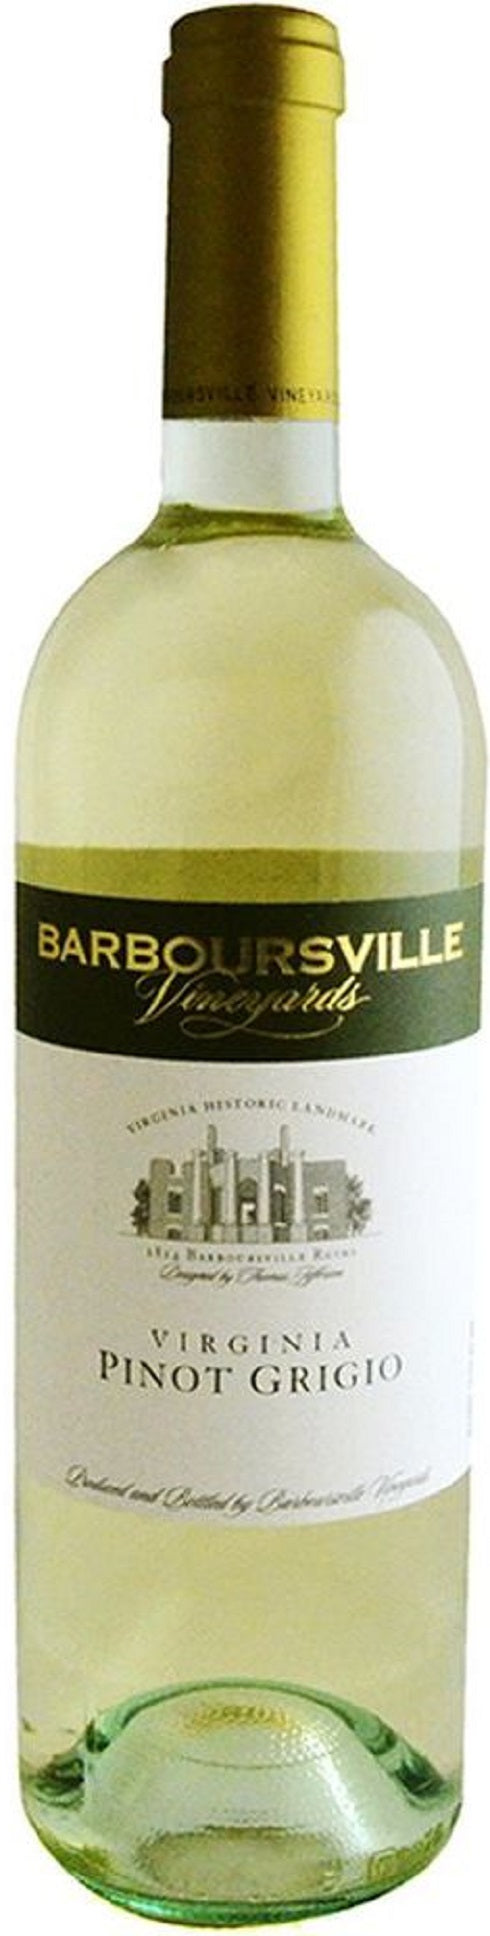 Barboursville Vineyards Pinot Grigio 2019